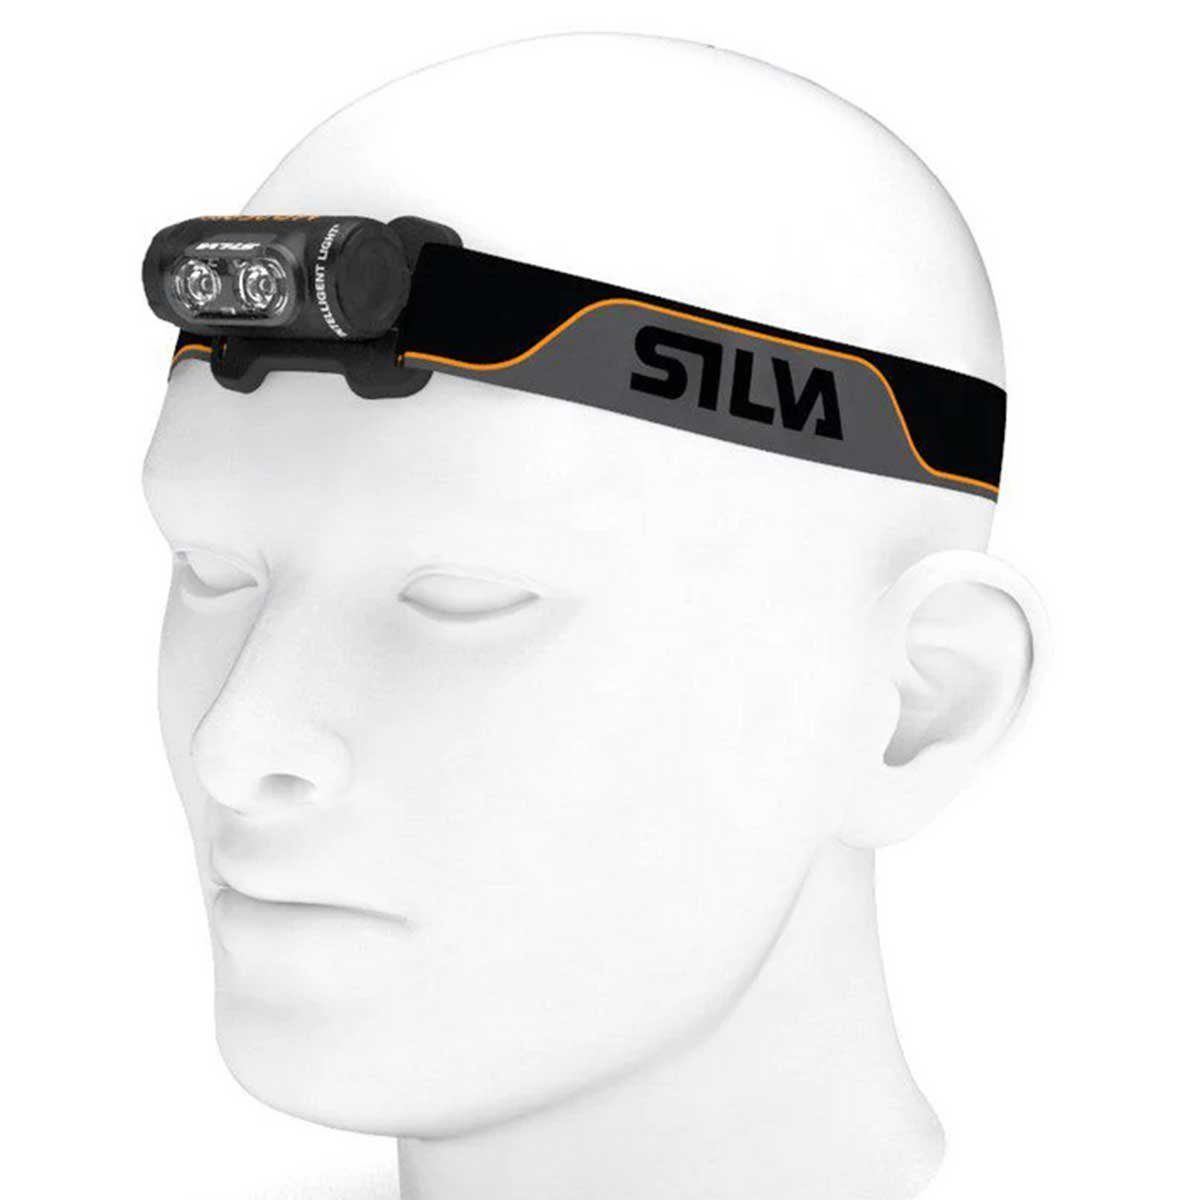 Silva MR400RC LED 400 Stirnlampe Stirnlampe Lumen LED